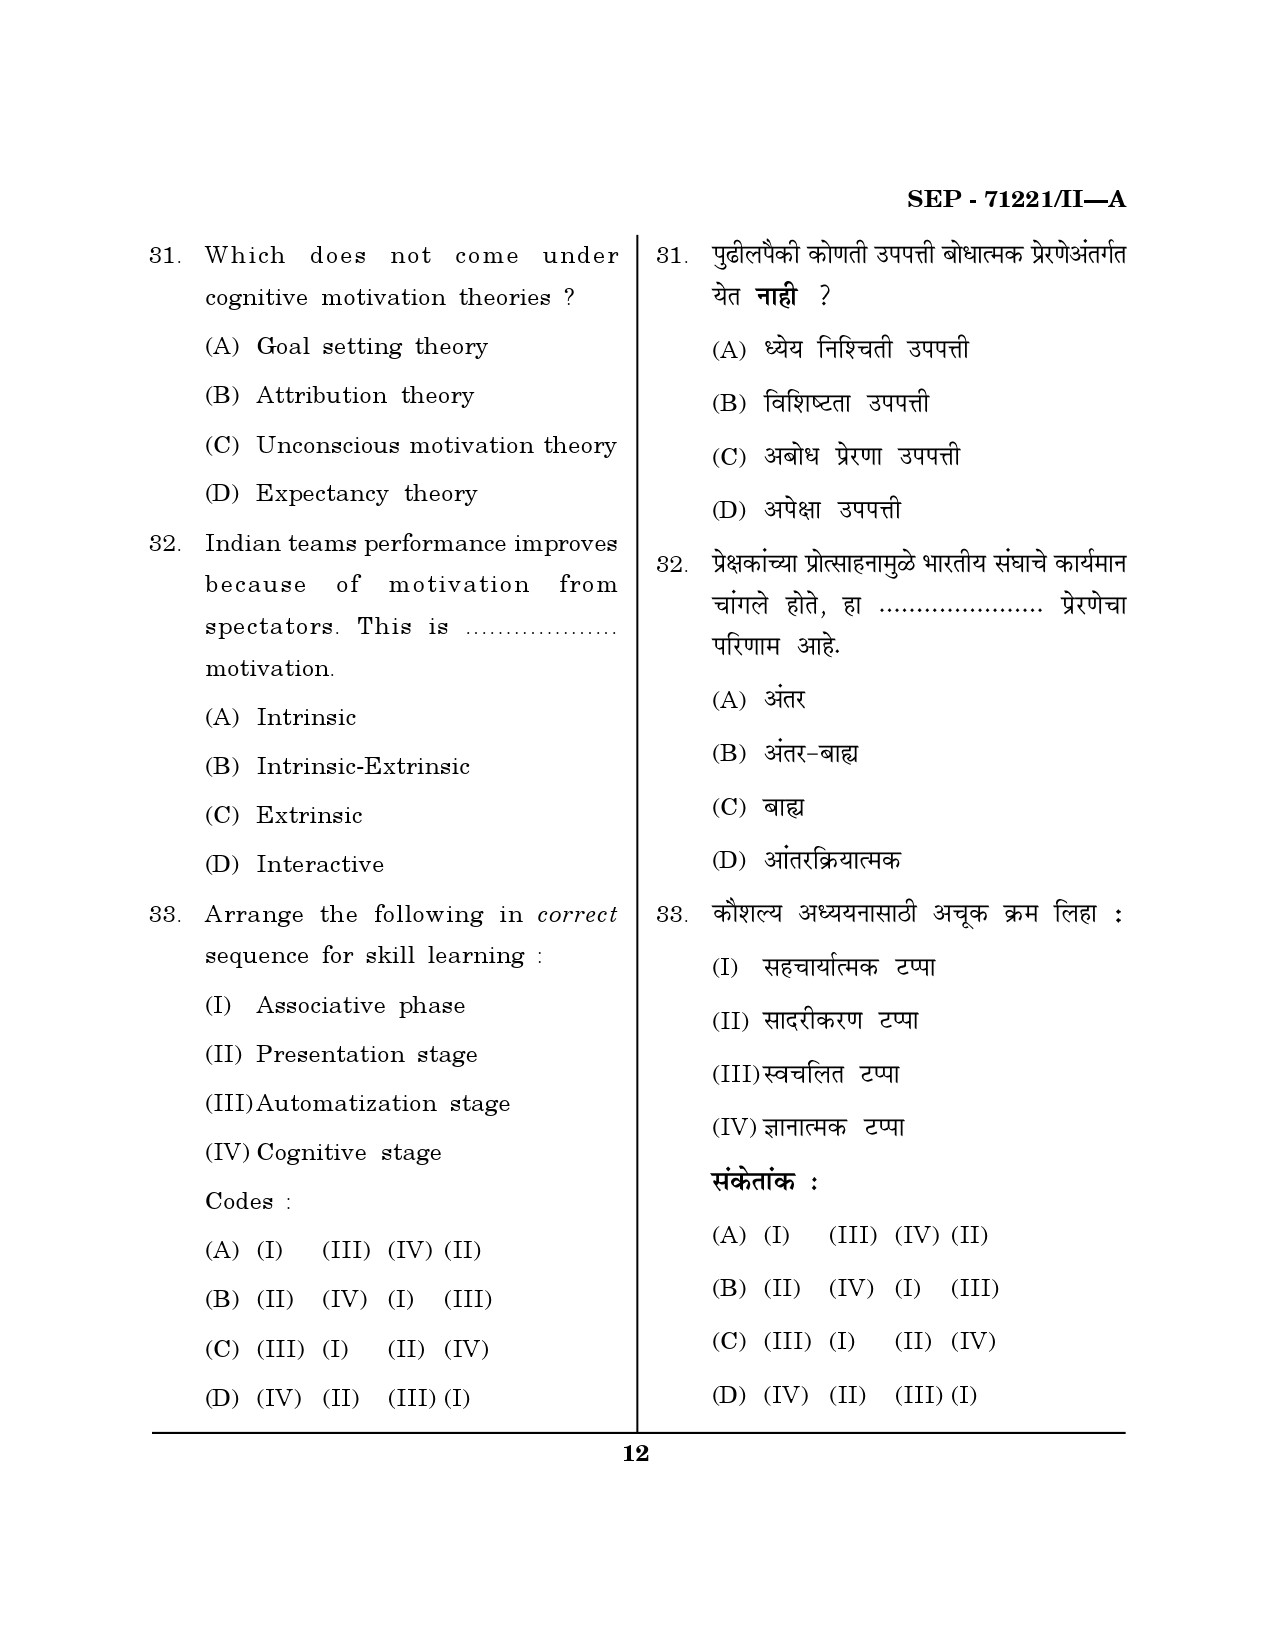 Maharashtra SET Physical Education Exam Question Paper September 2021 11